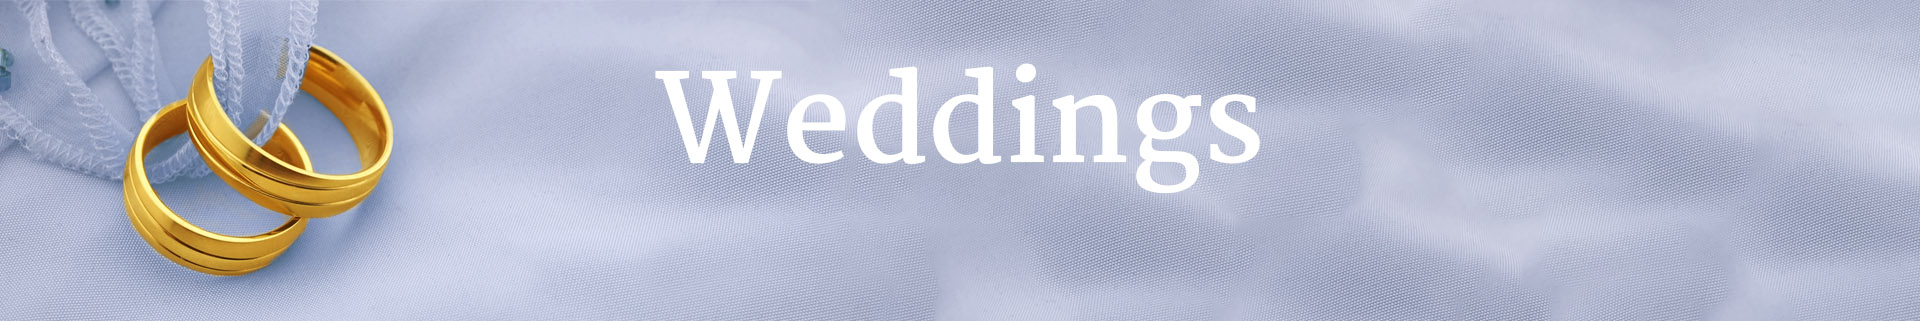 SDR-Wedding+Title-2